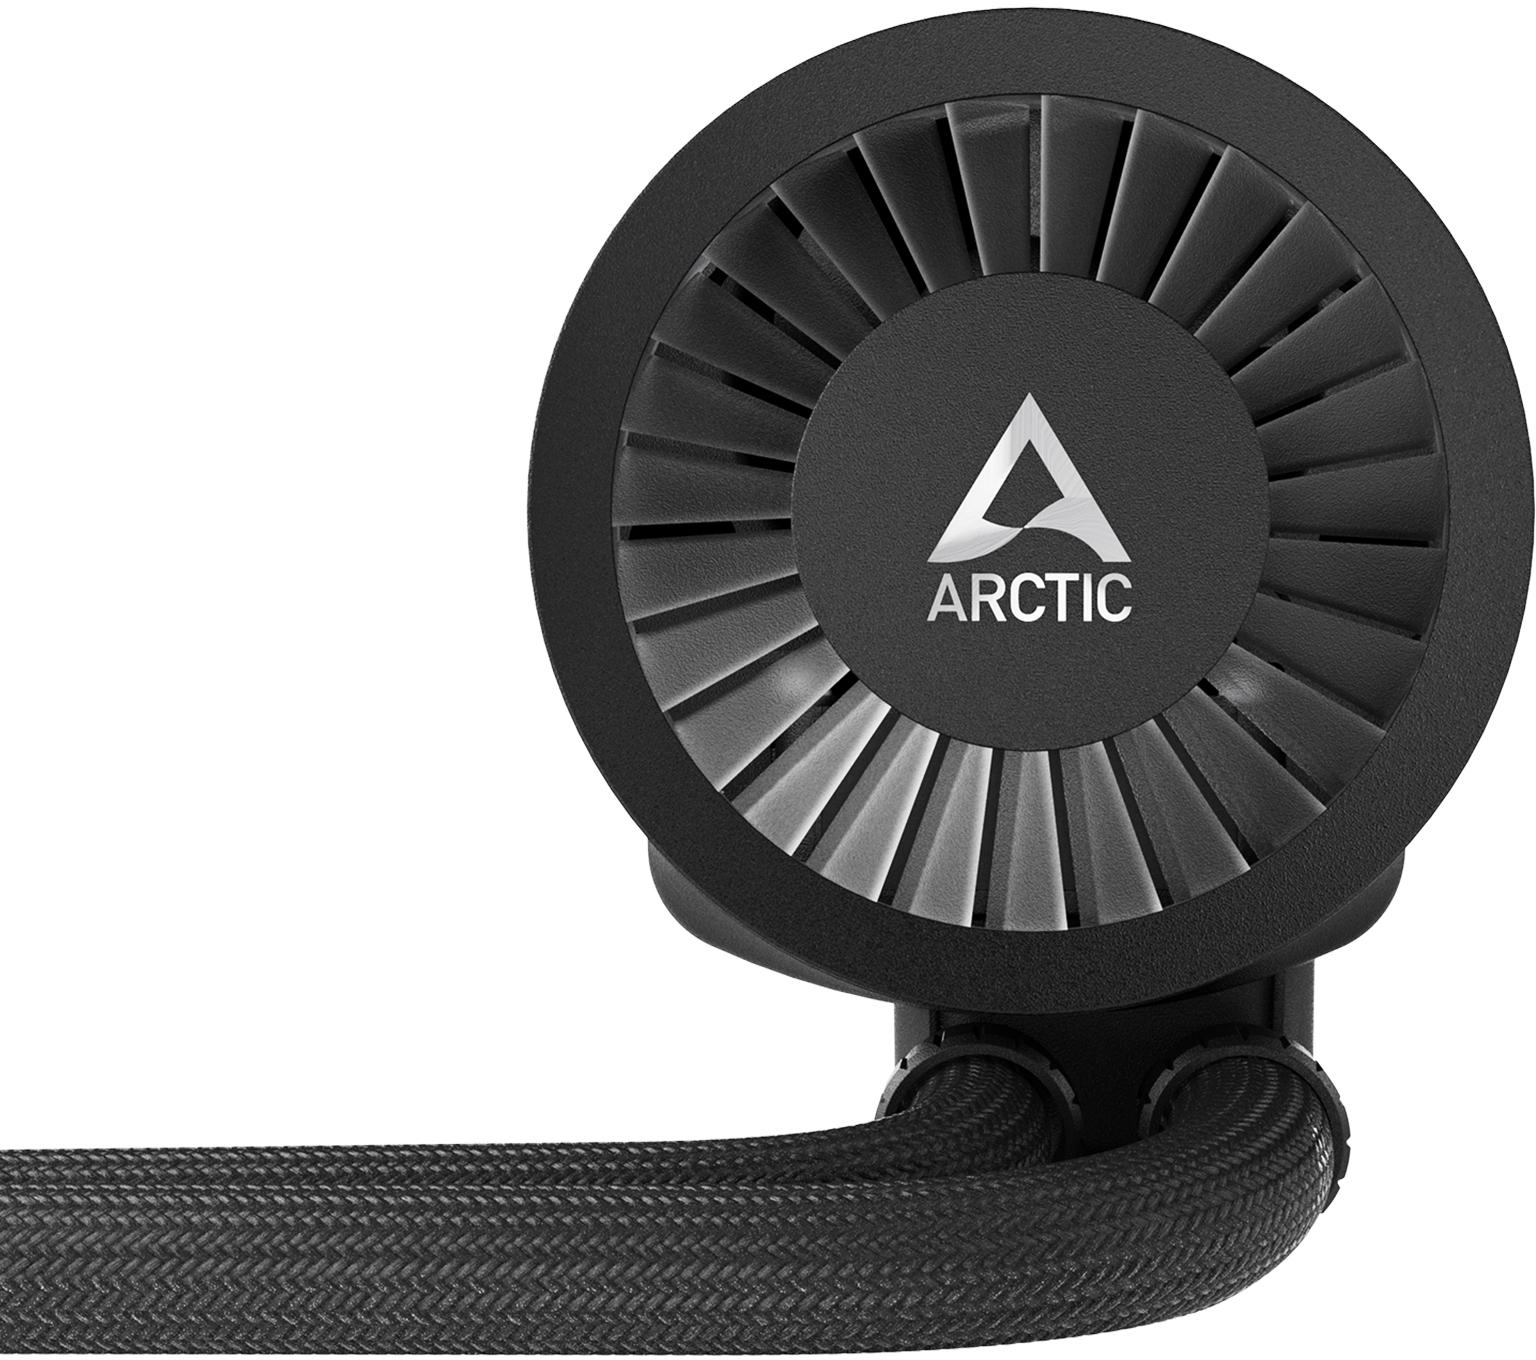 Arctic - Kit Refrigeración Líquida Arctic Liquid Freezer III - 280mm